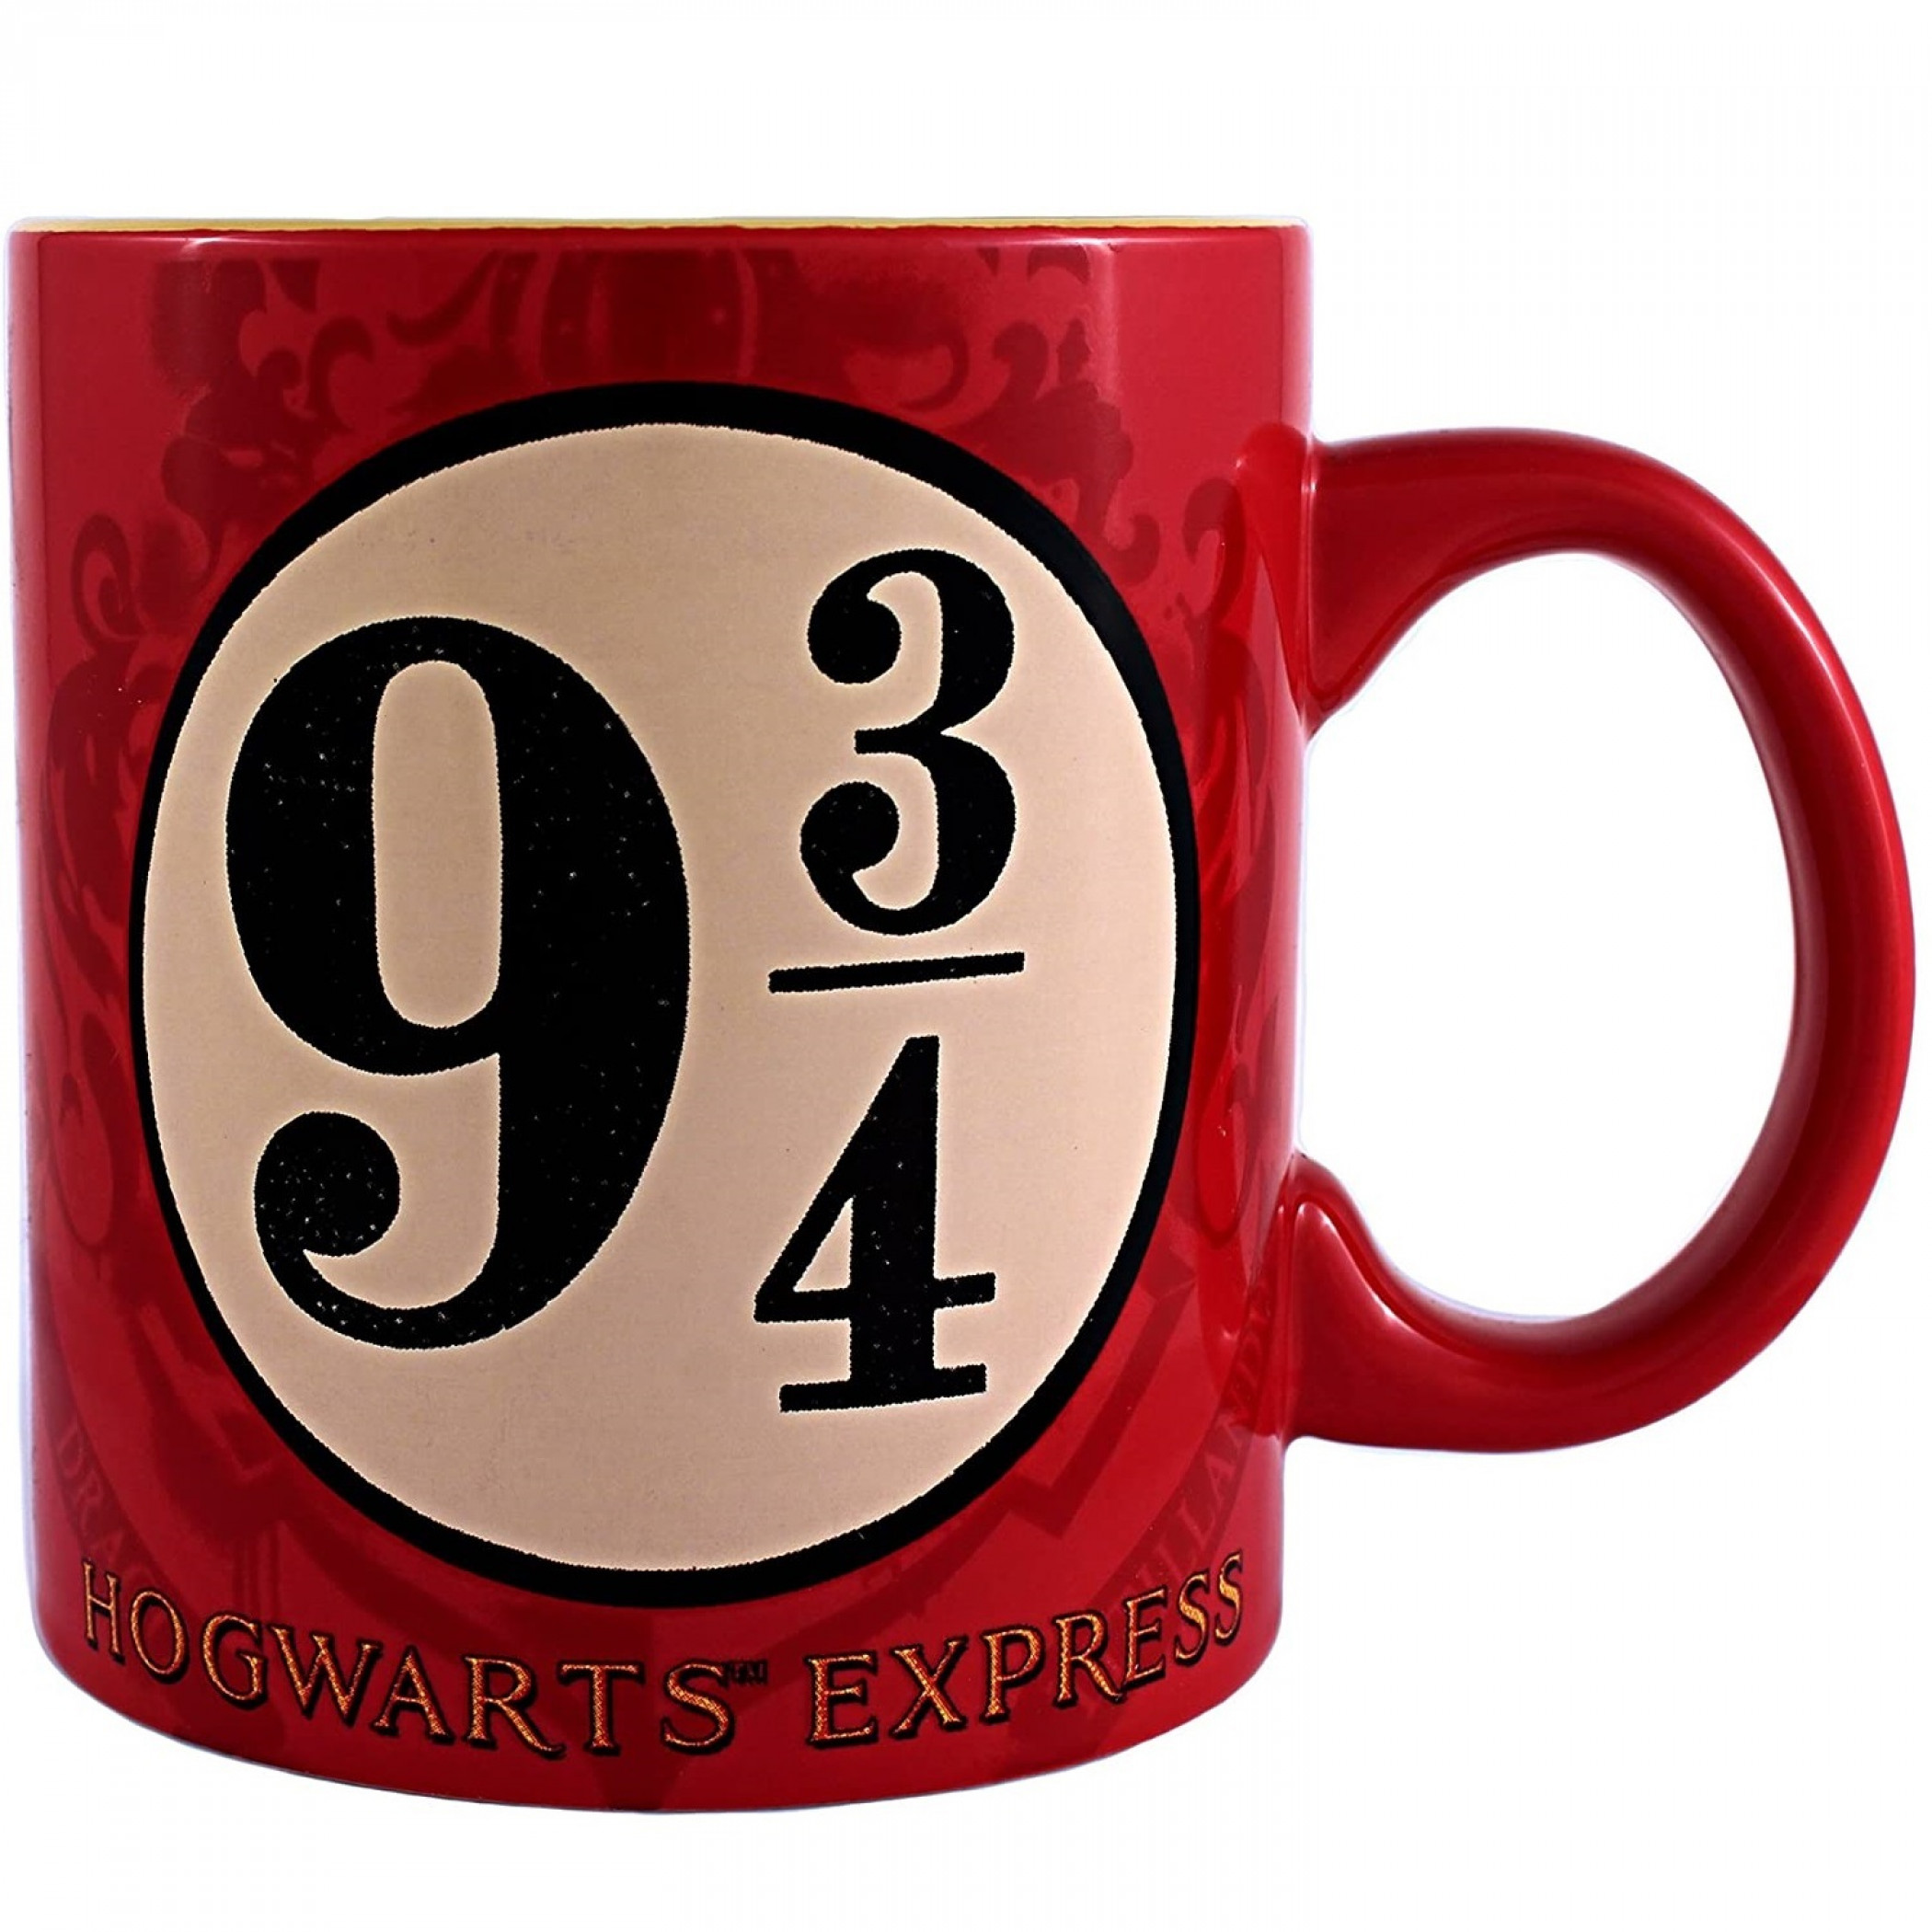 Harry Potter 9 and 3/4 20 Ounce Mug